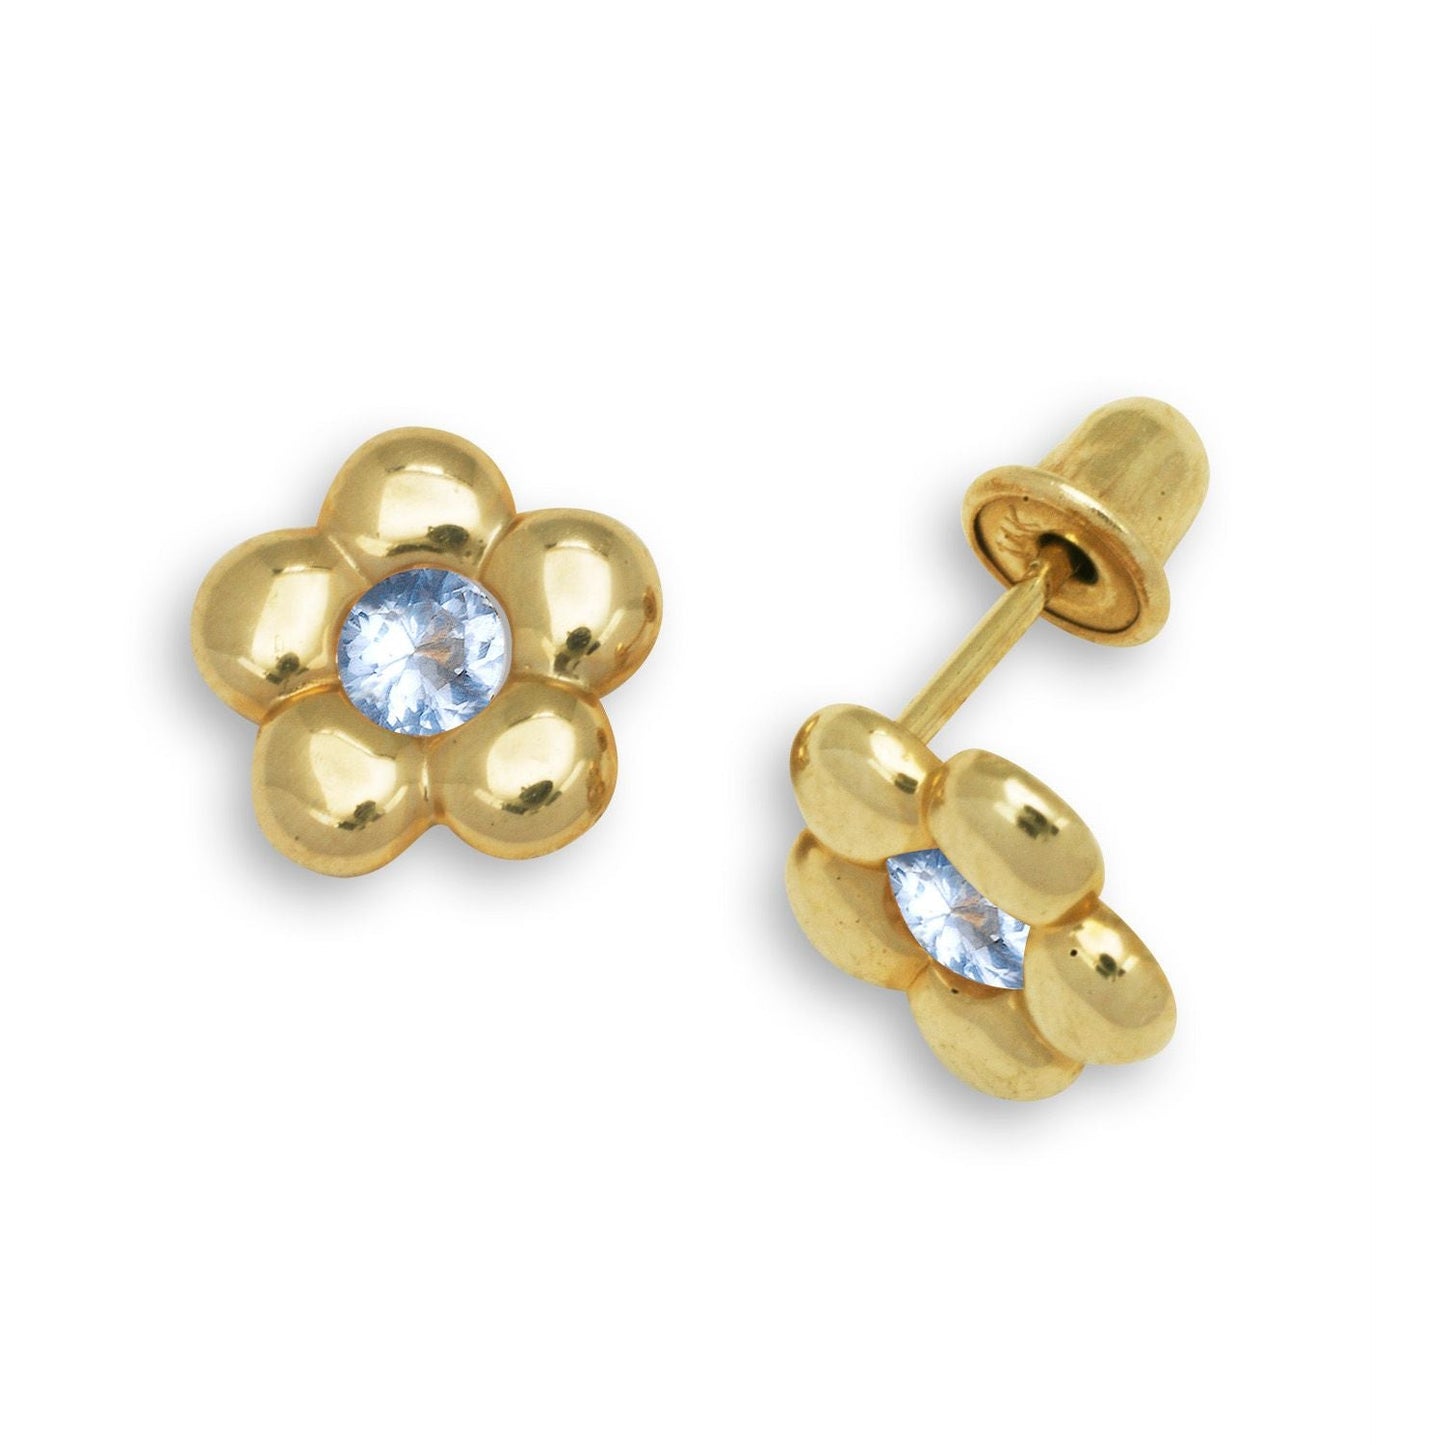 Solid Gold Stud Flower Earrings 925 Sterling Silver Rhodium Plated Flower Stud Earrings